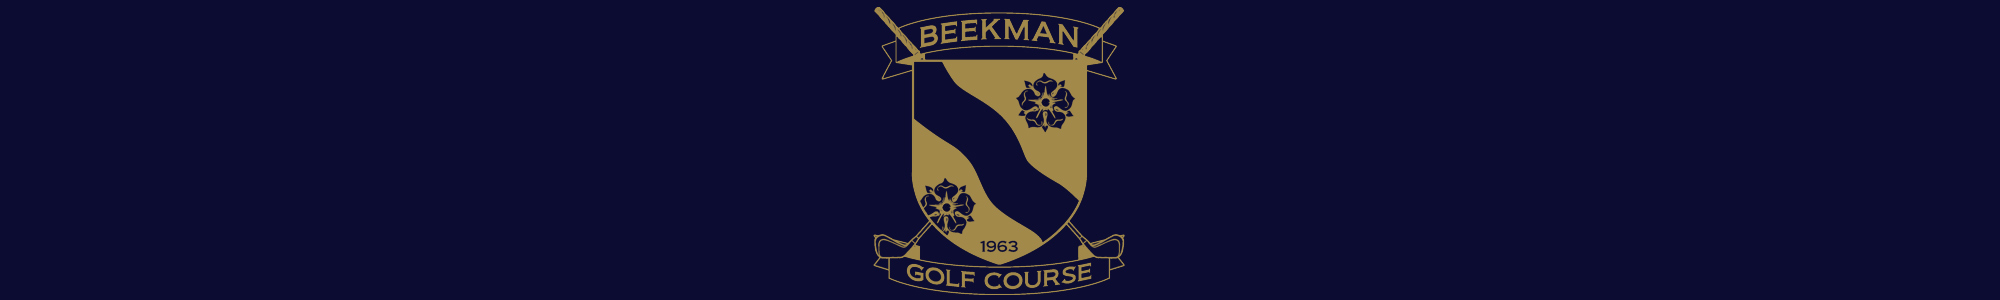 beekman golf course logo